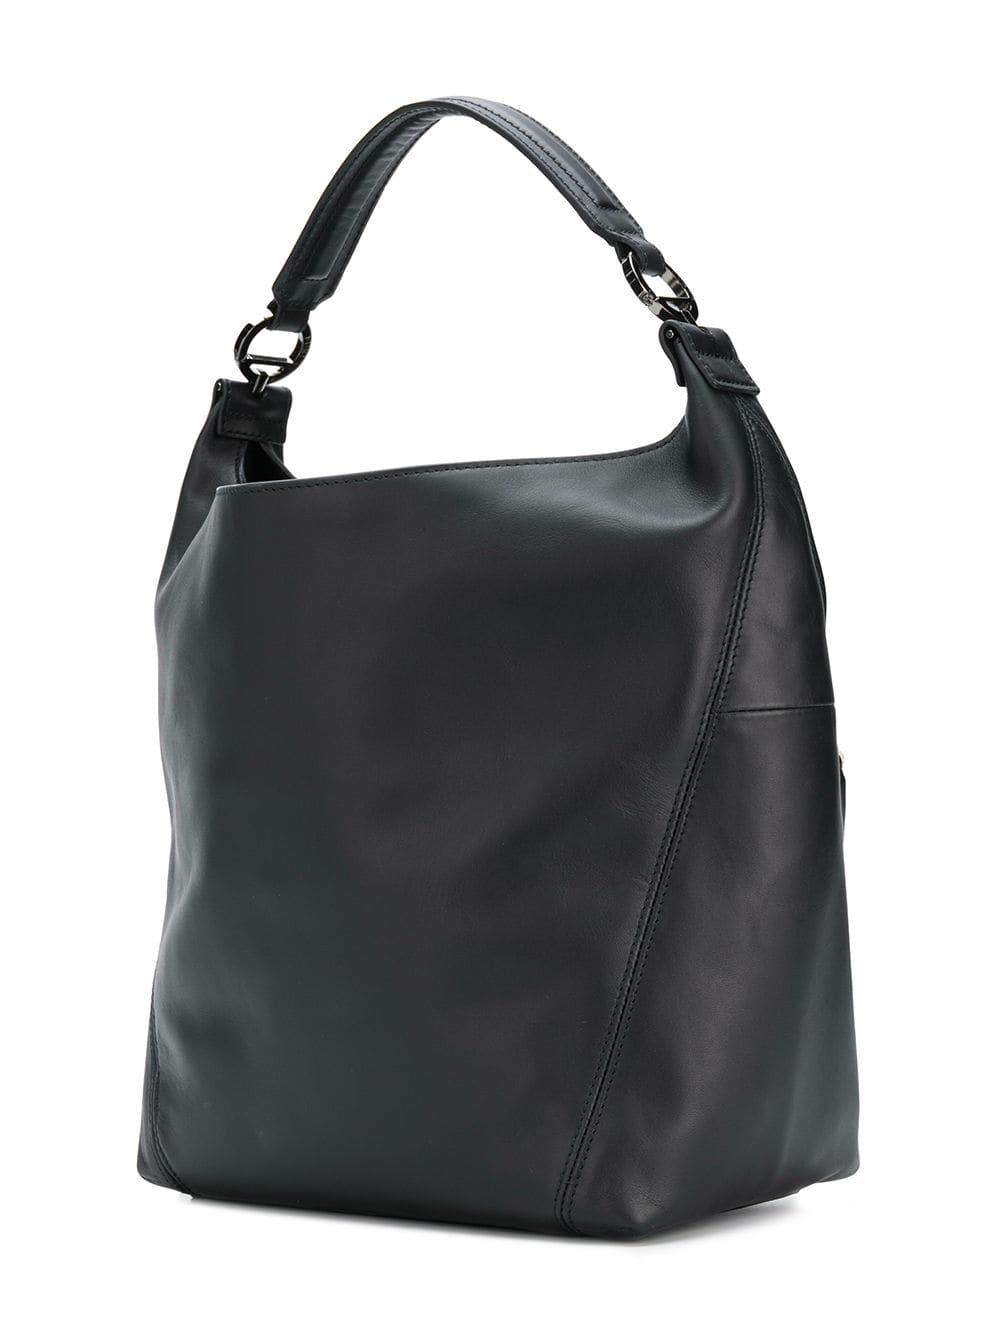 Furla Leather Lady Hobo Bag in Black - Lyst